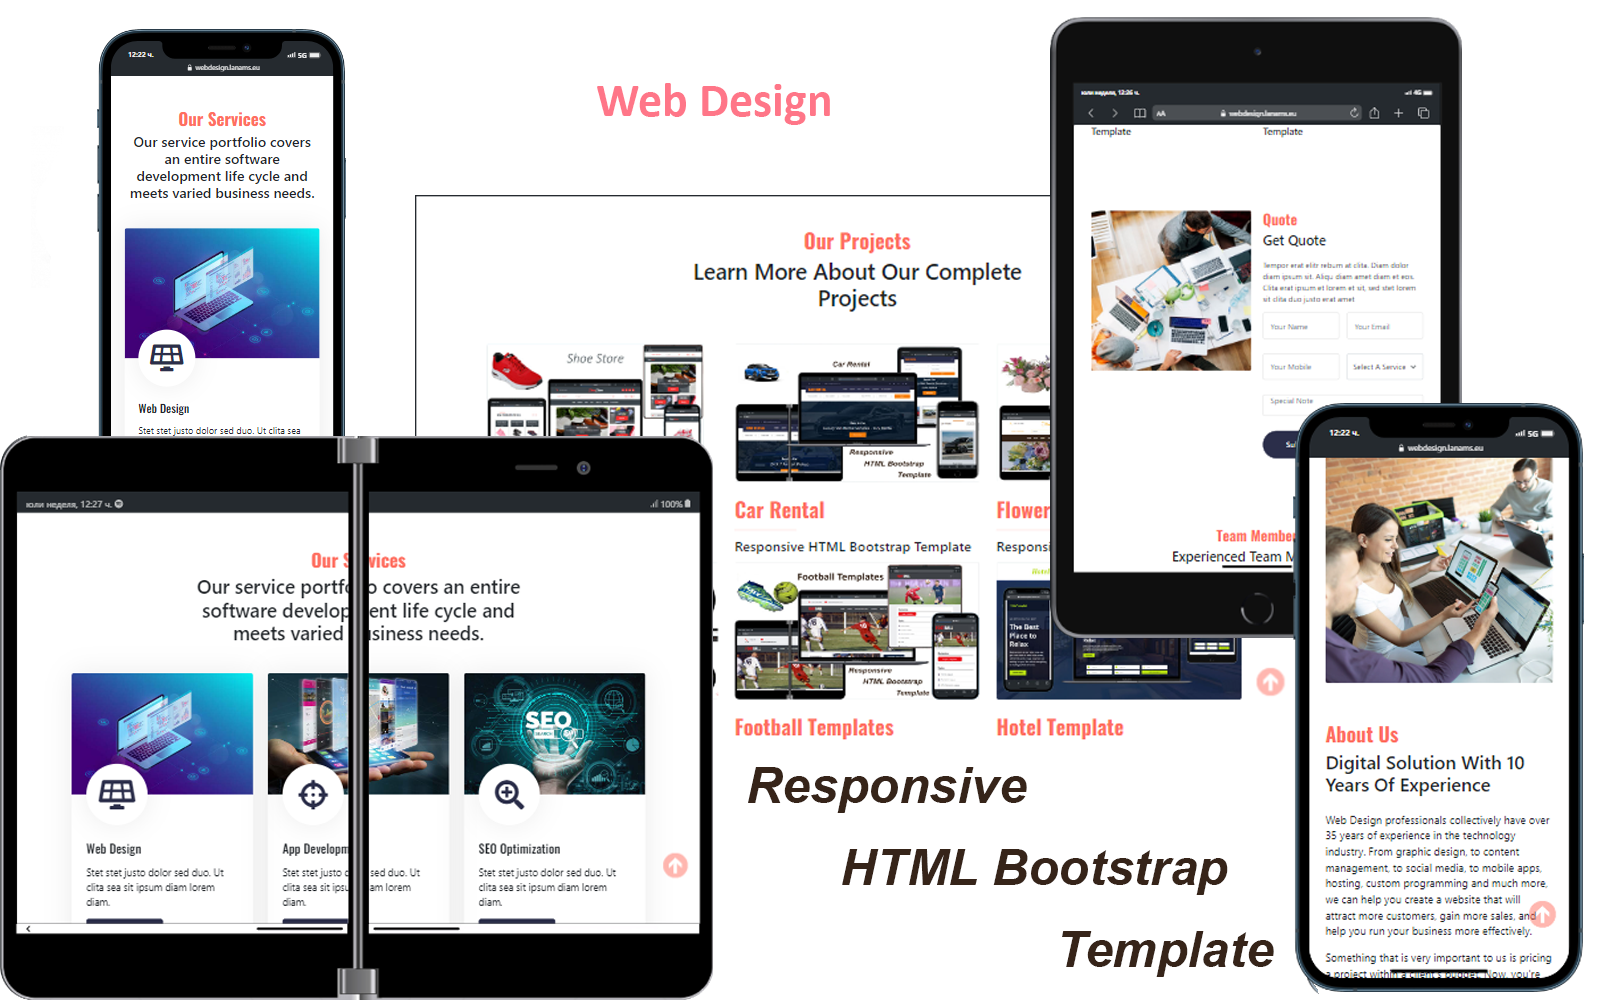 Intranet Web Design - Responsive HTML Bootstrap Template